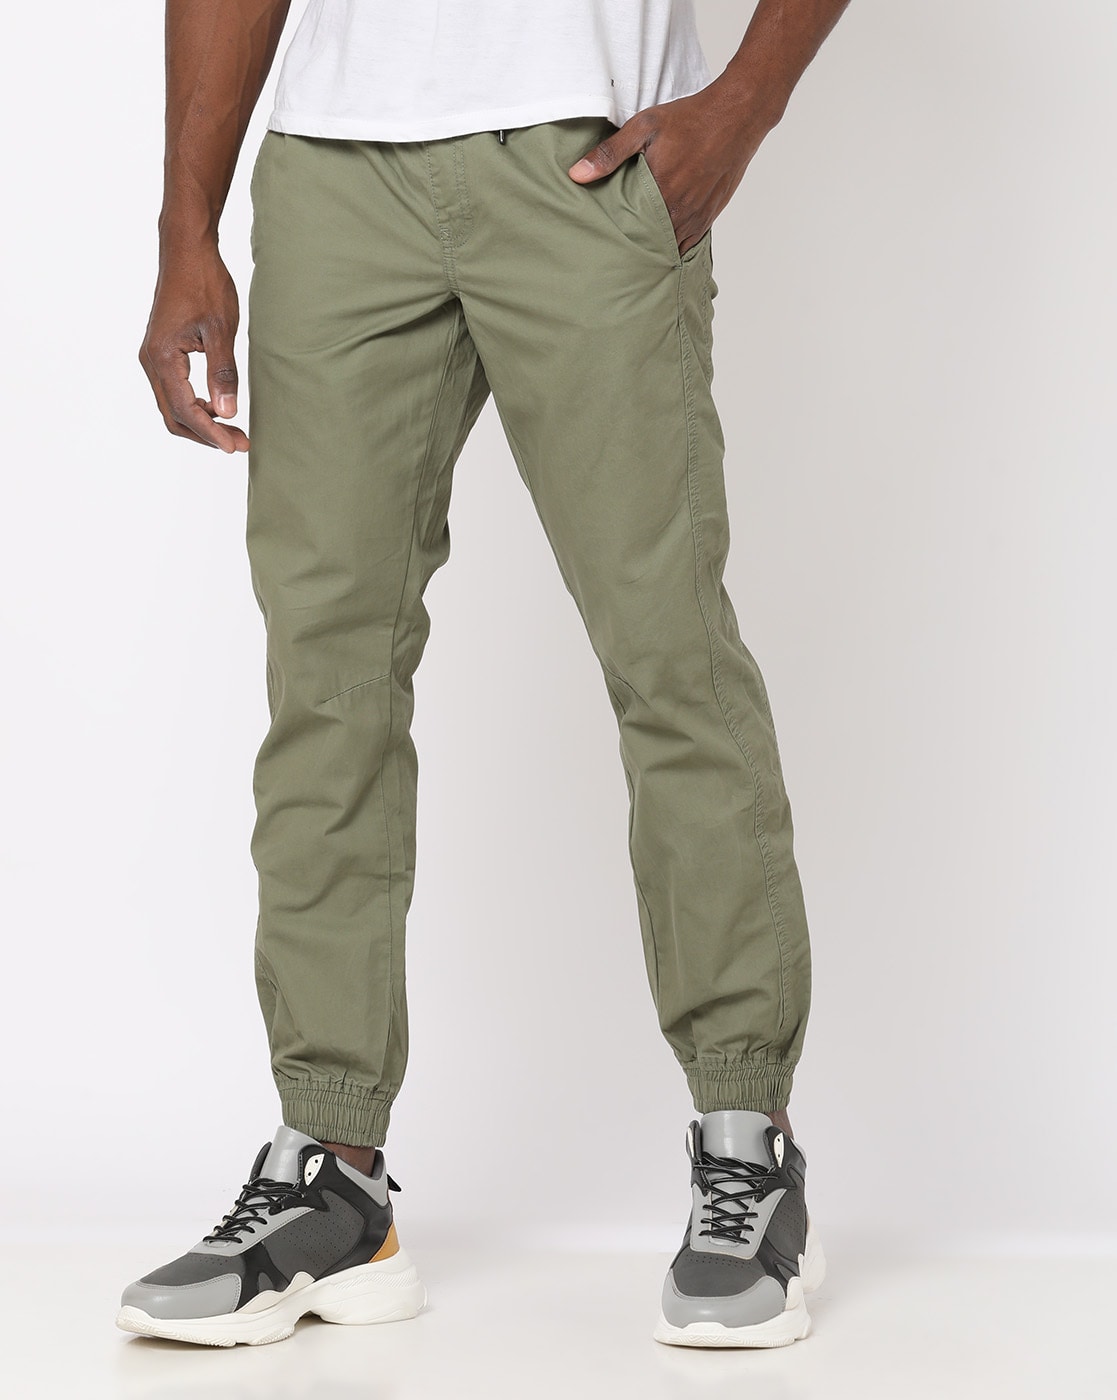 YUHAOTIN Joggers for Men Green Men's Sweatpants Joggers Men's Slim